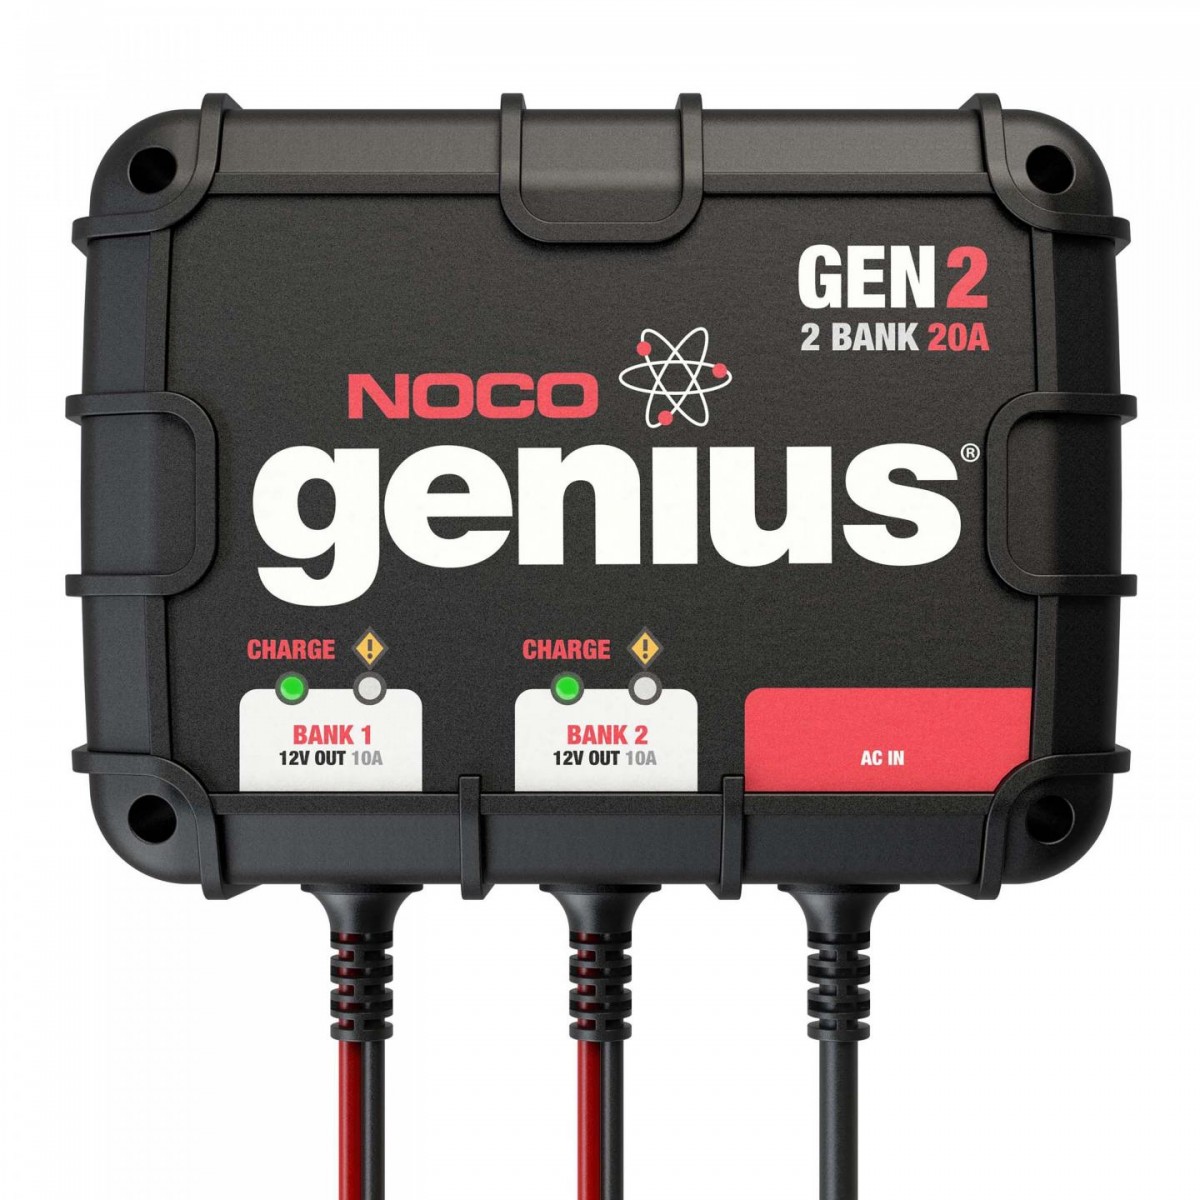 NOCO GENIUS G4, 4.4-Amp Smart Charger